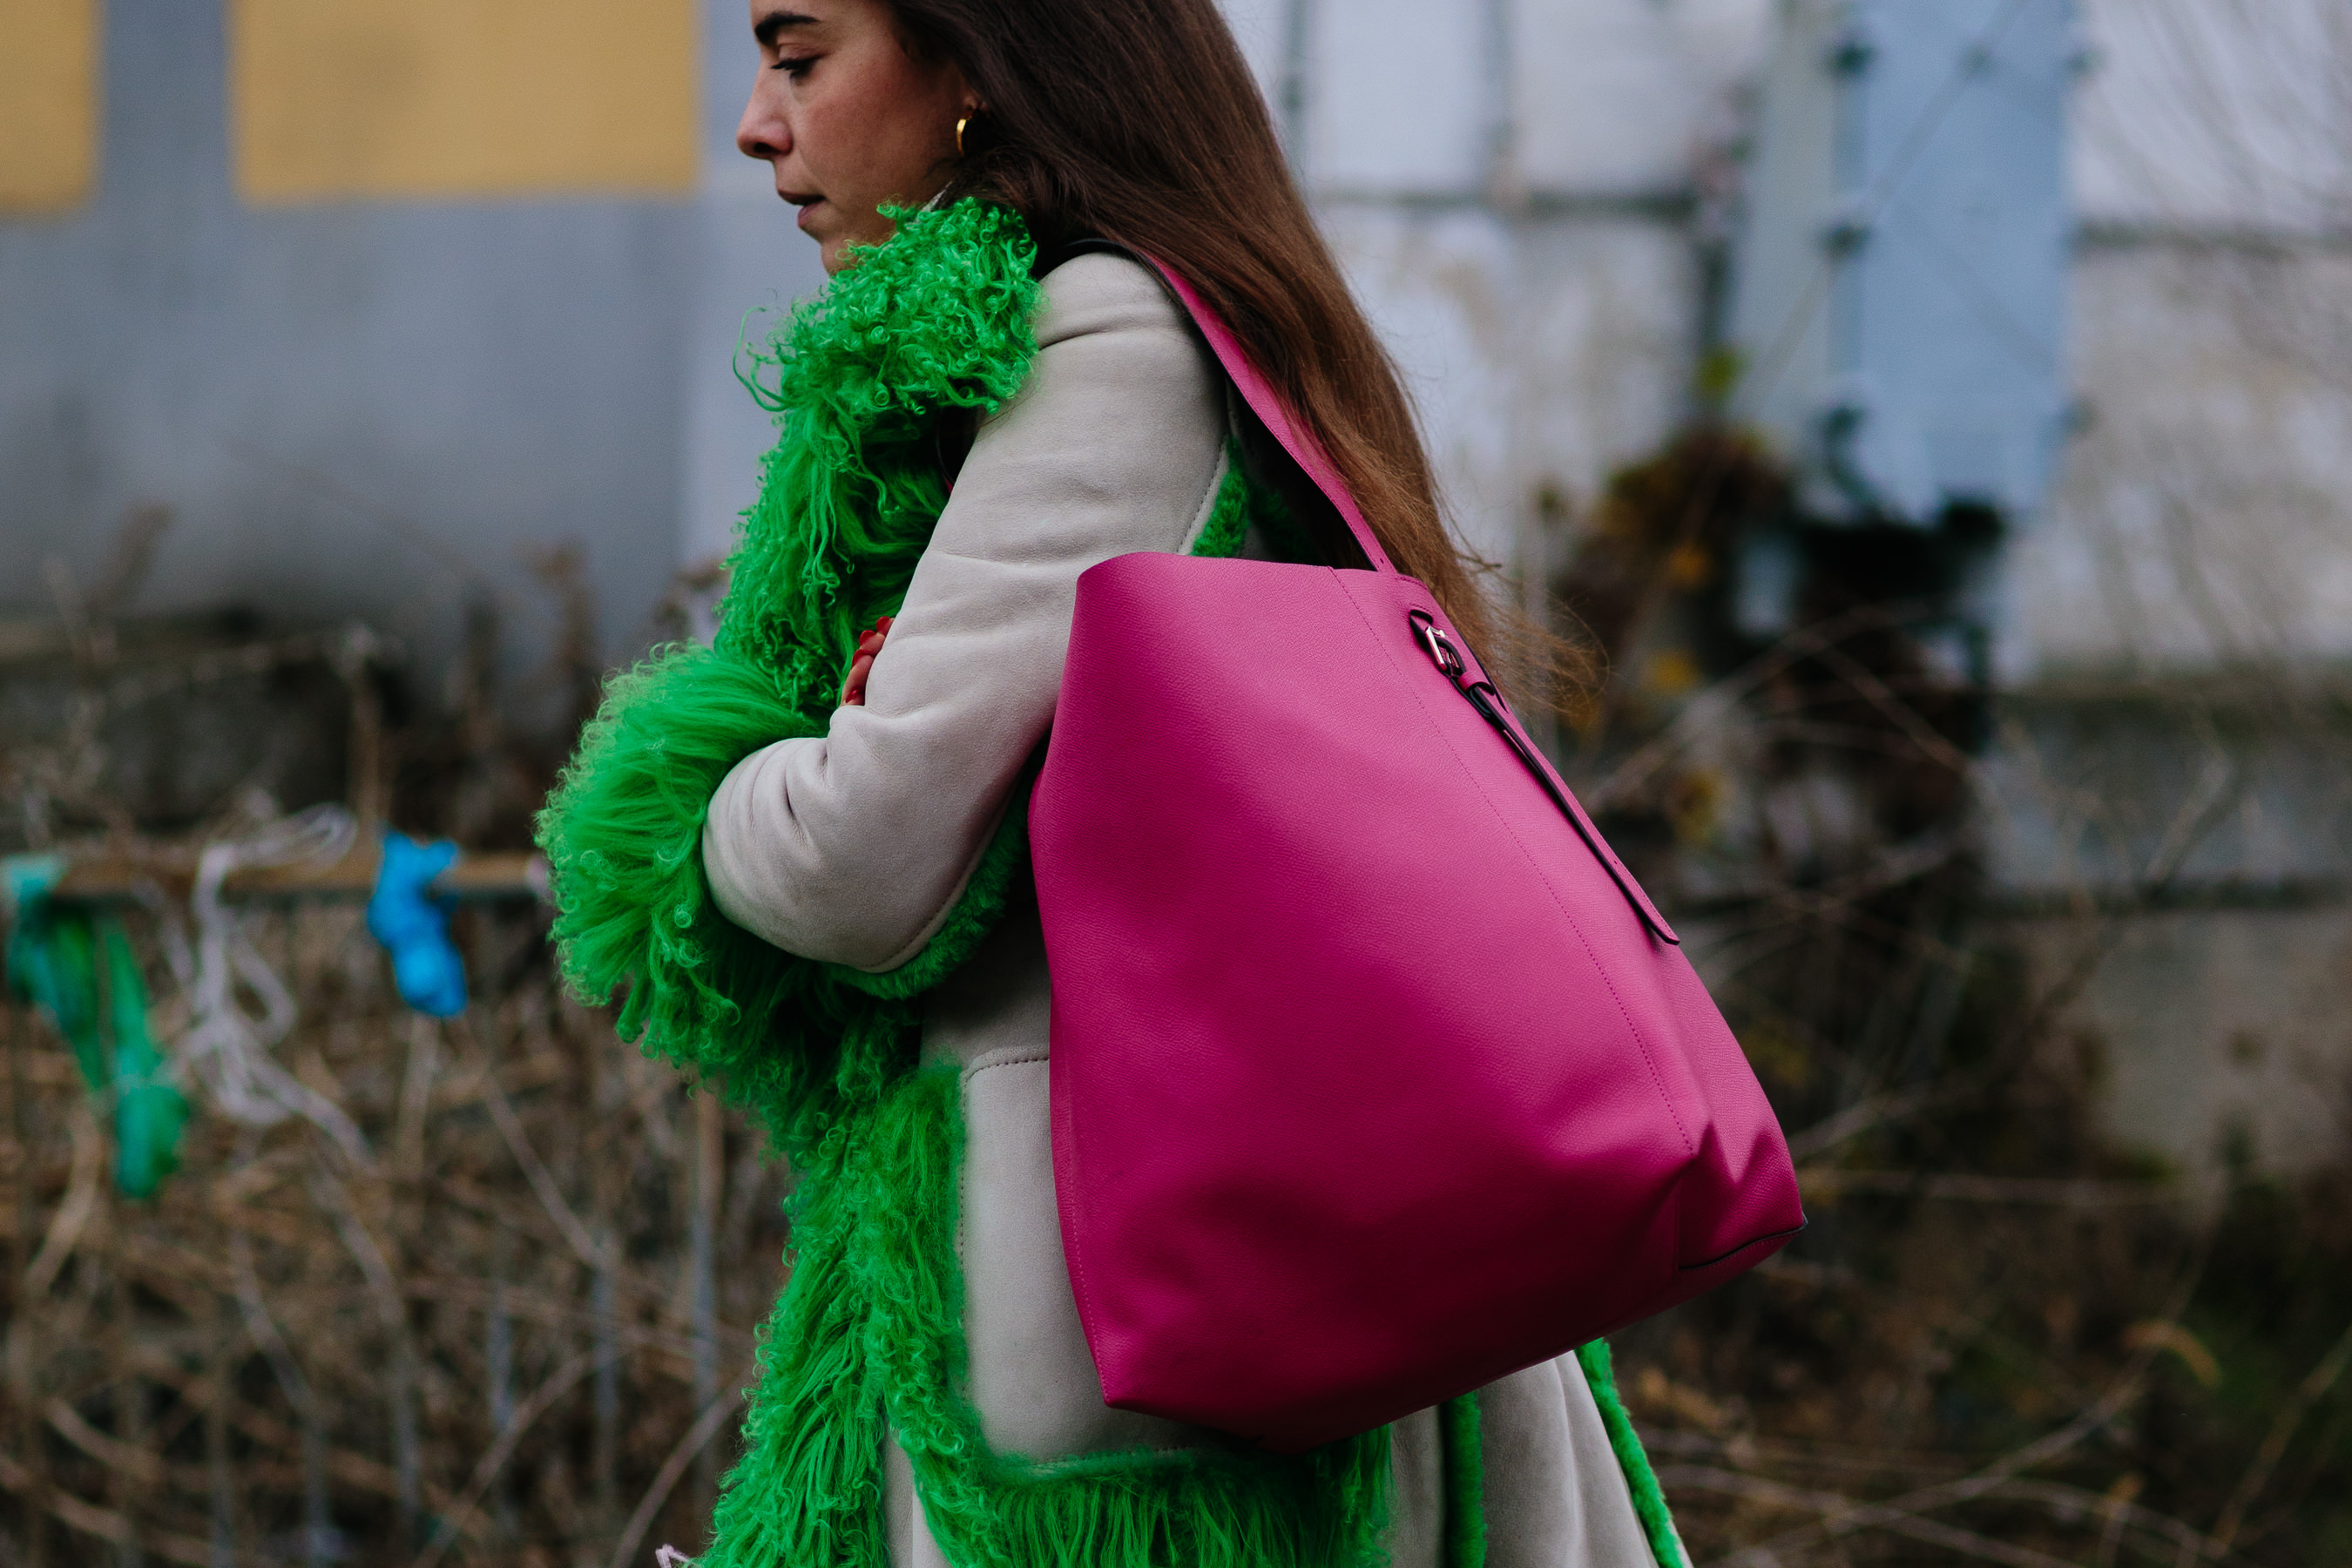 Greek editor wearing green coat and pink bag